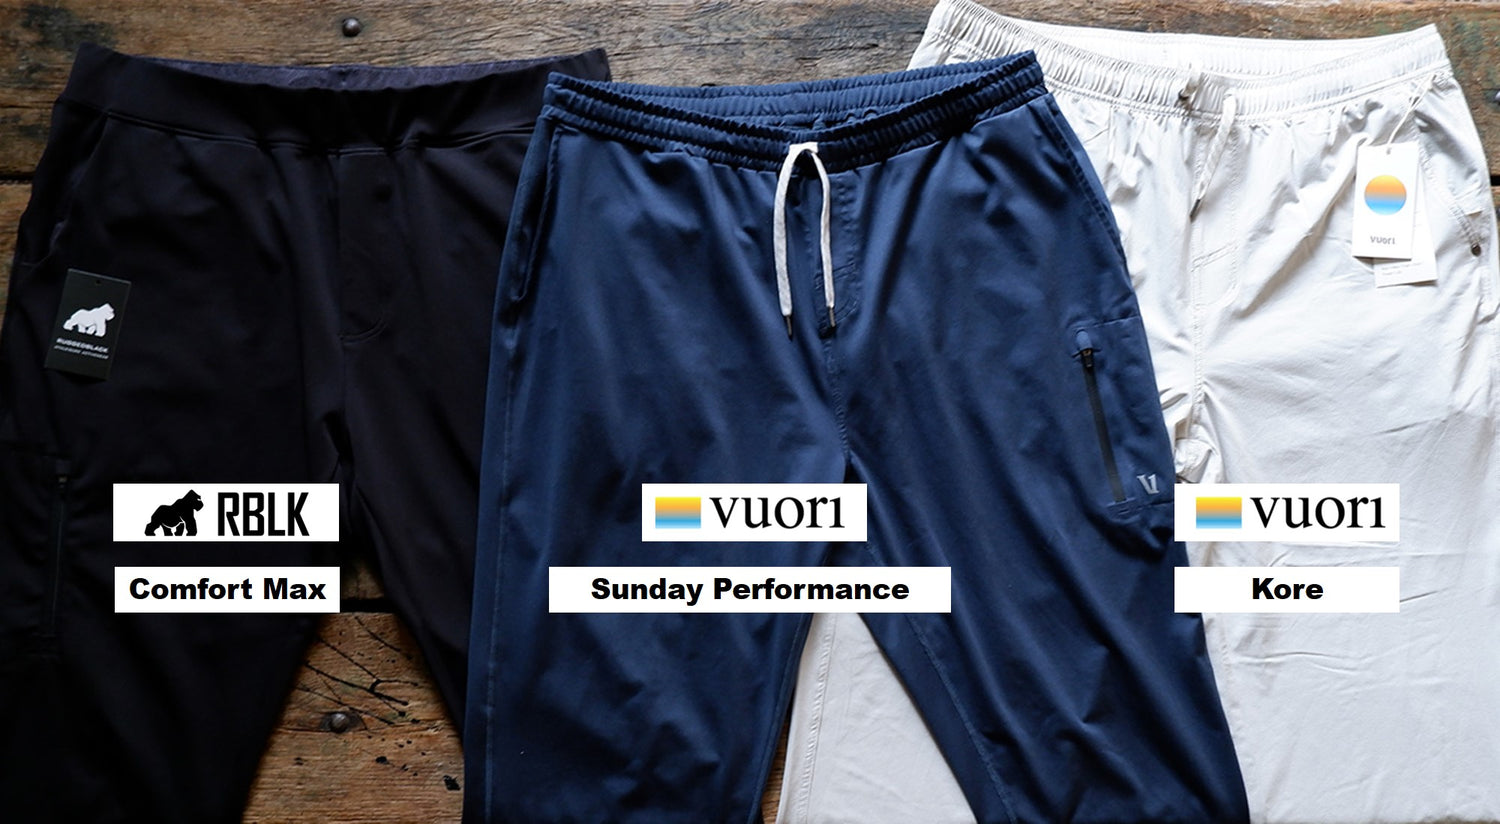 Sunday Performance joggers, Vuori